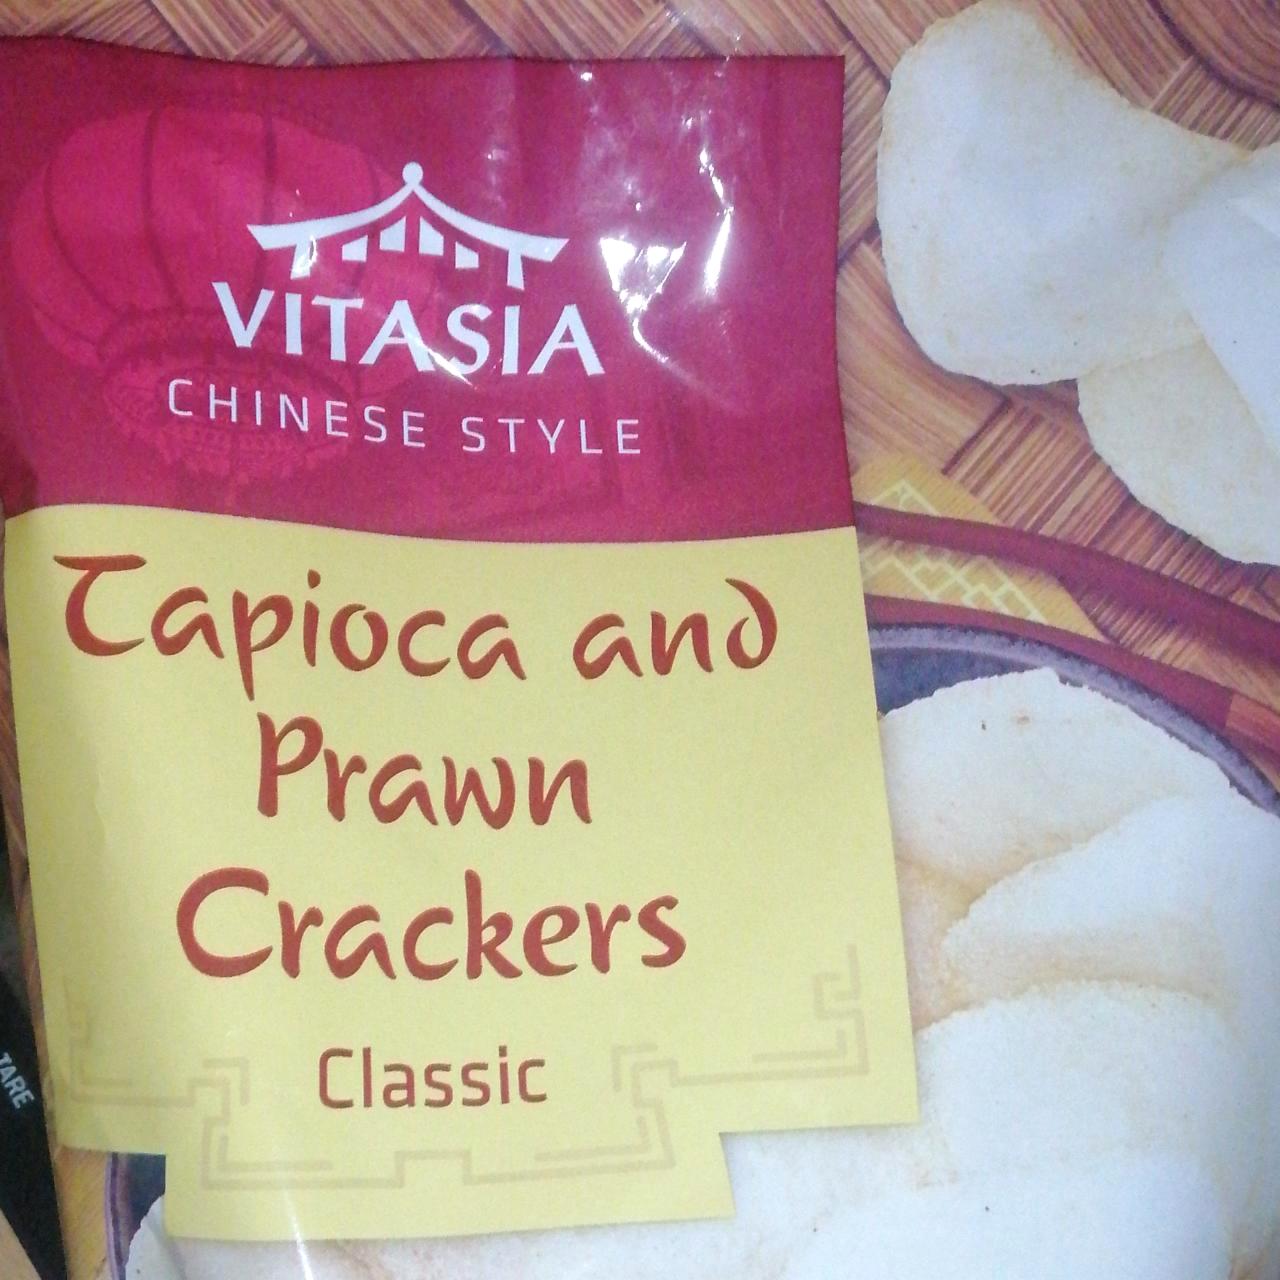 Képek - Capioca and prawn crackers classic Vitasia